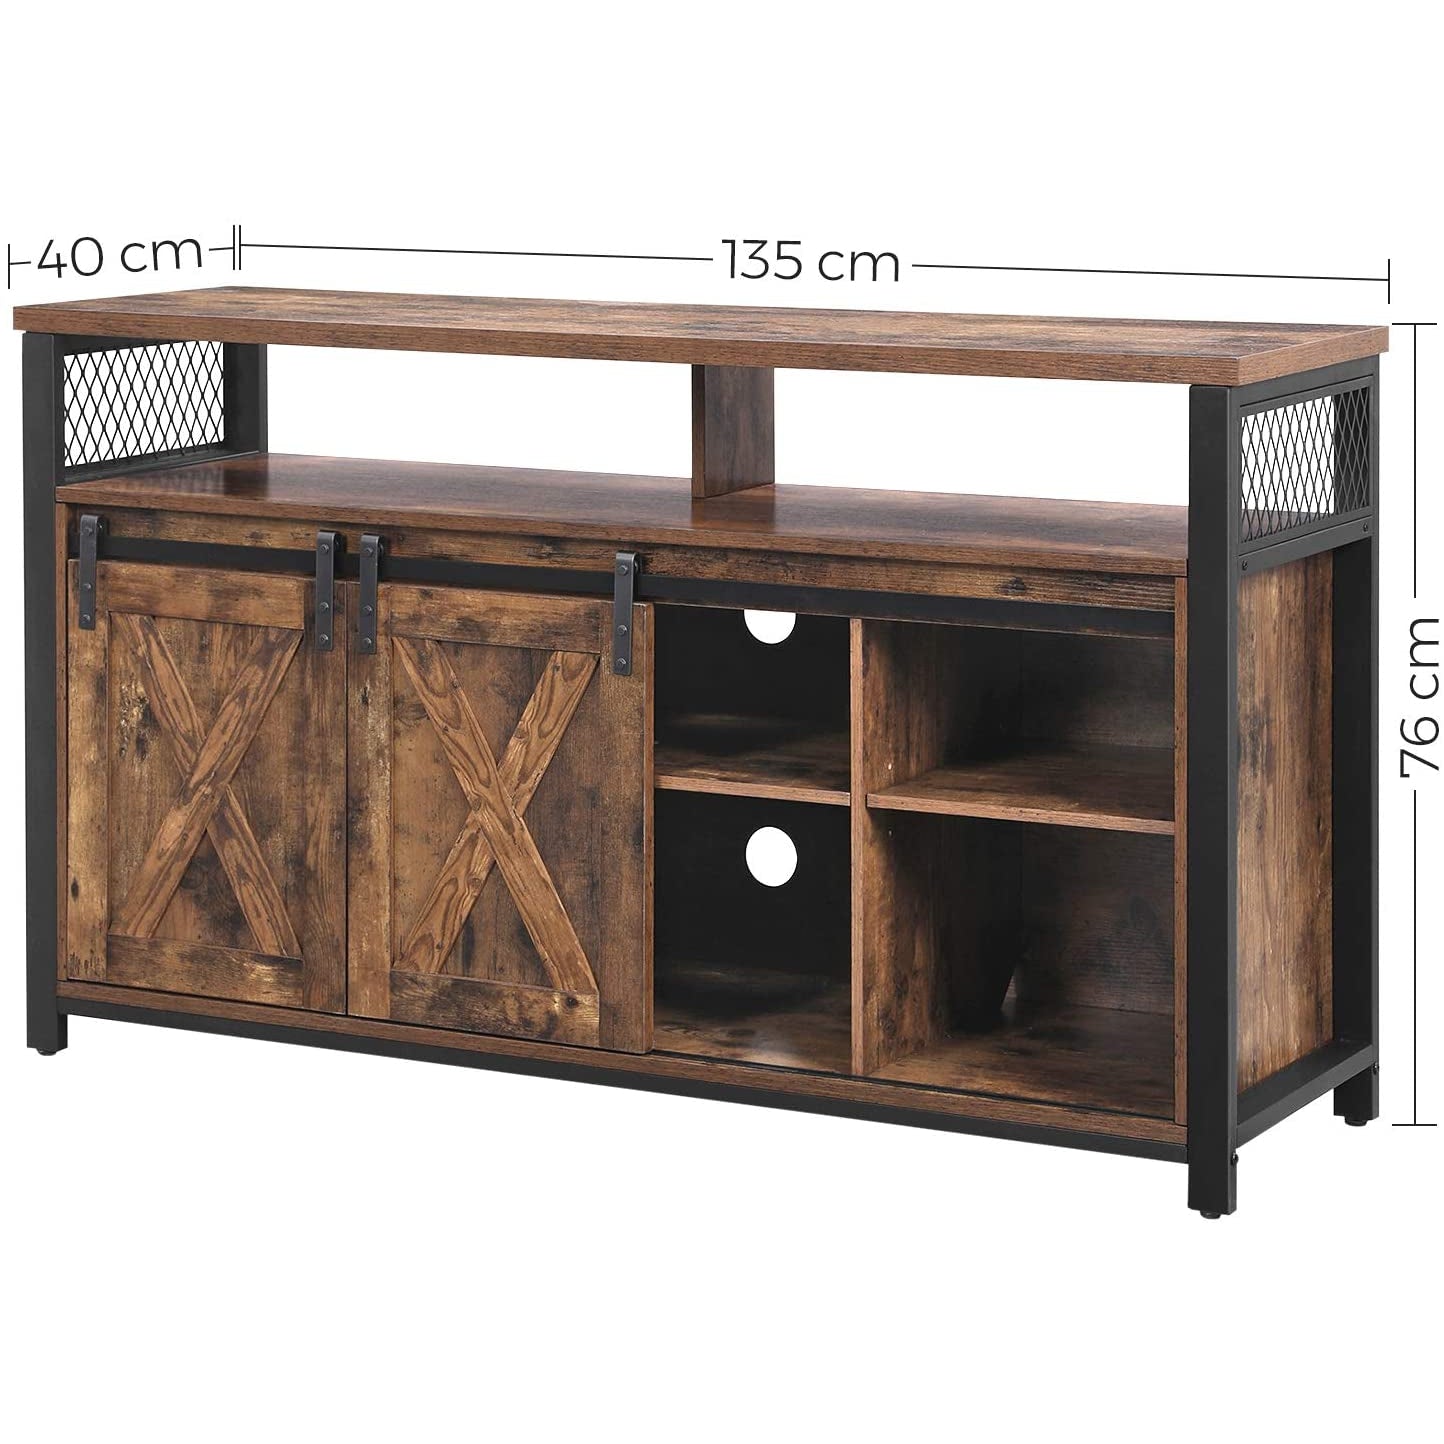 Nancy's Starkville TV Furniture - TV Cabinet - 2 Sliding Doors - Up to 60 Inch - 135 x 40 x 76 cm - Adjustable Shelves - Industrial - Brown